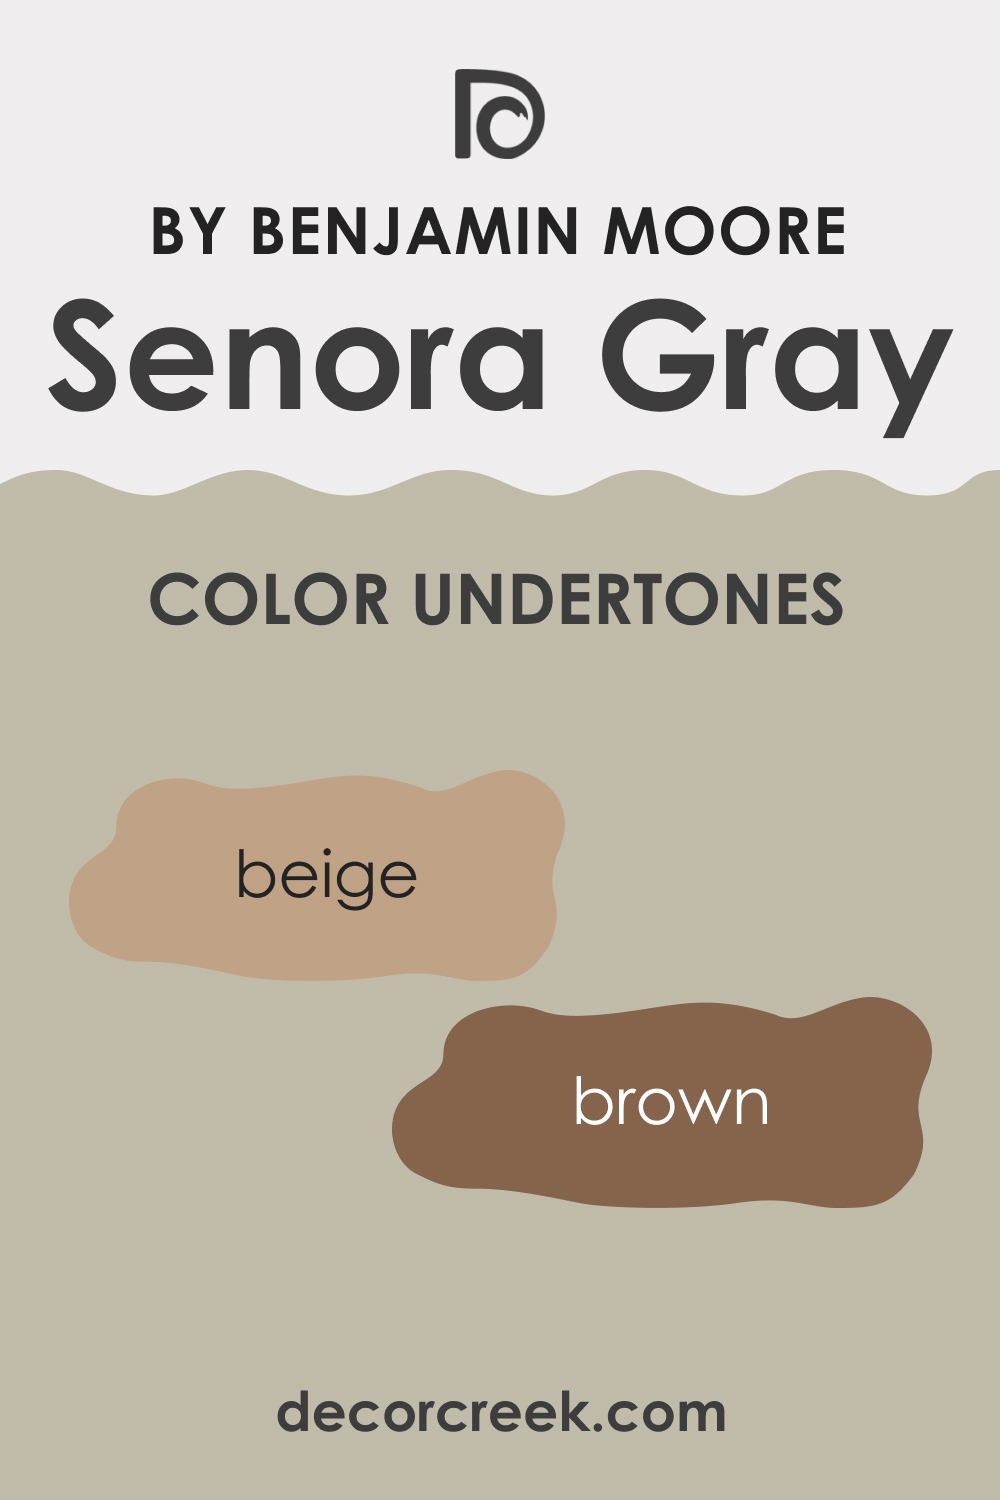 Undertones of Senora Gray 1530